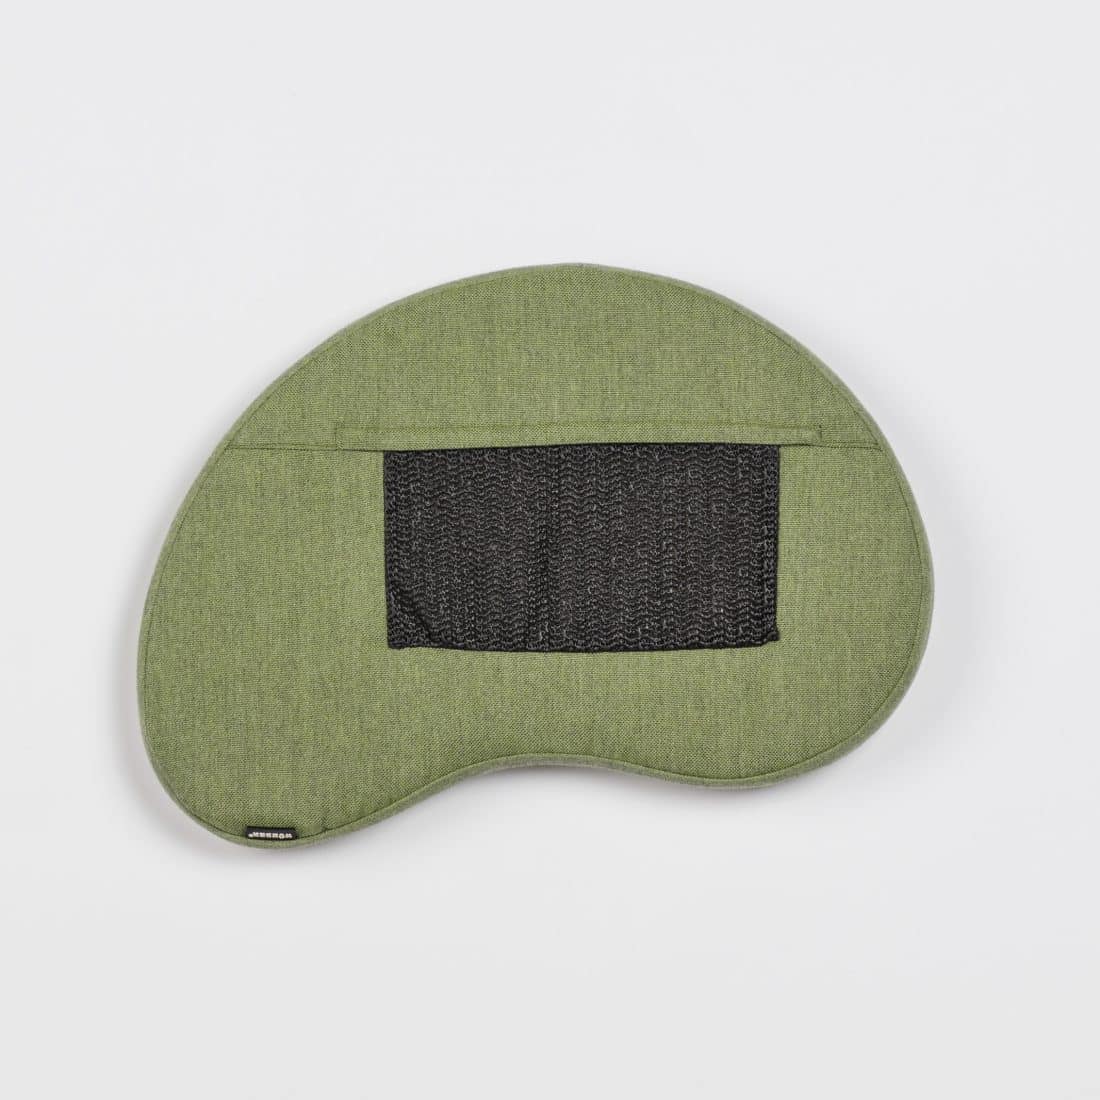 The Bean green underside, outdoor cushions by Wünder